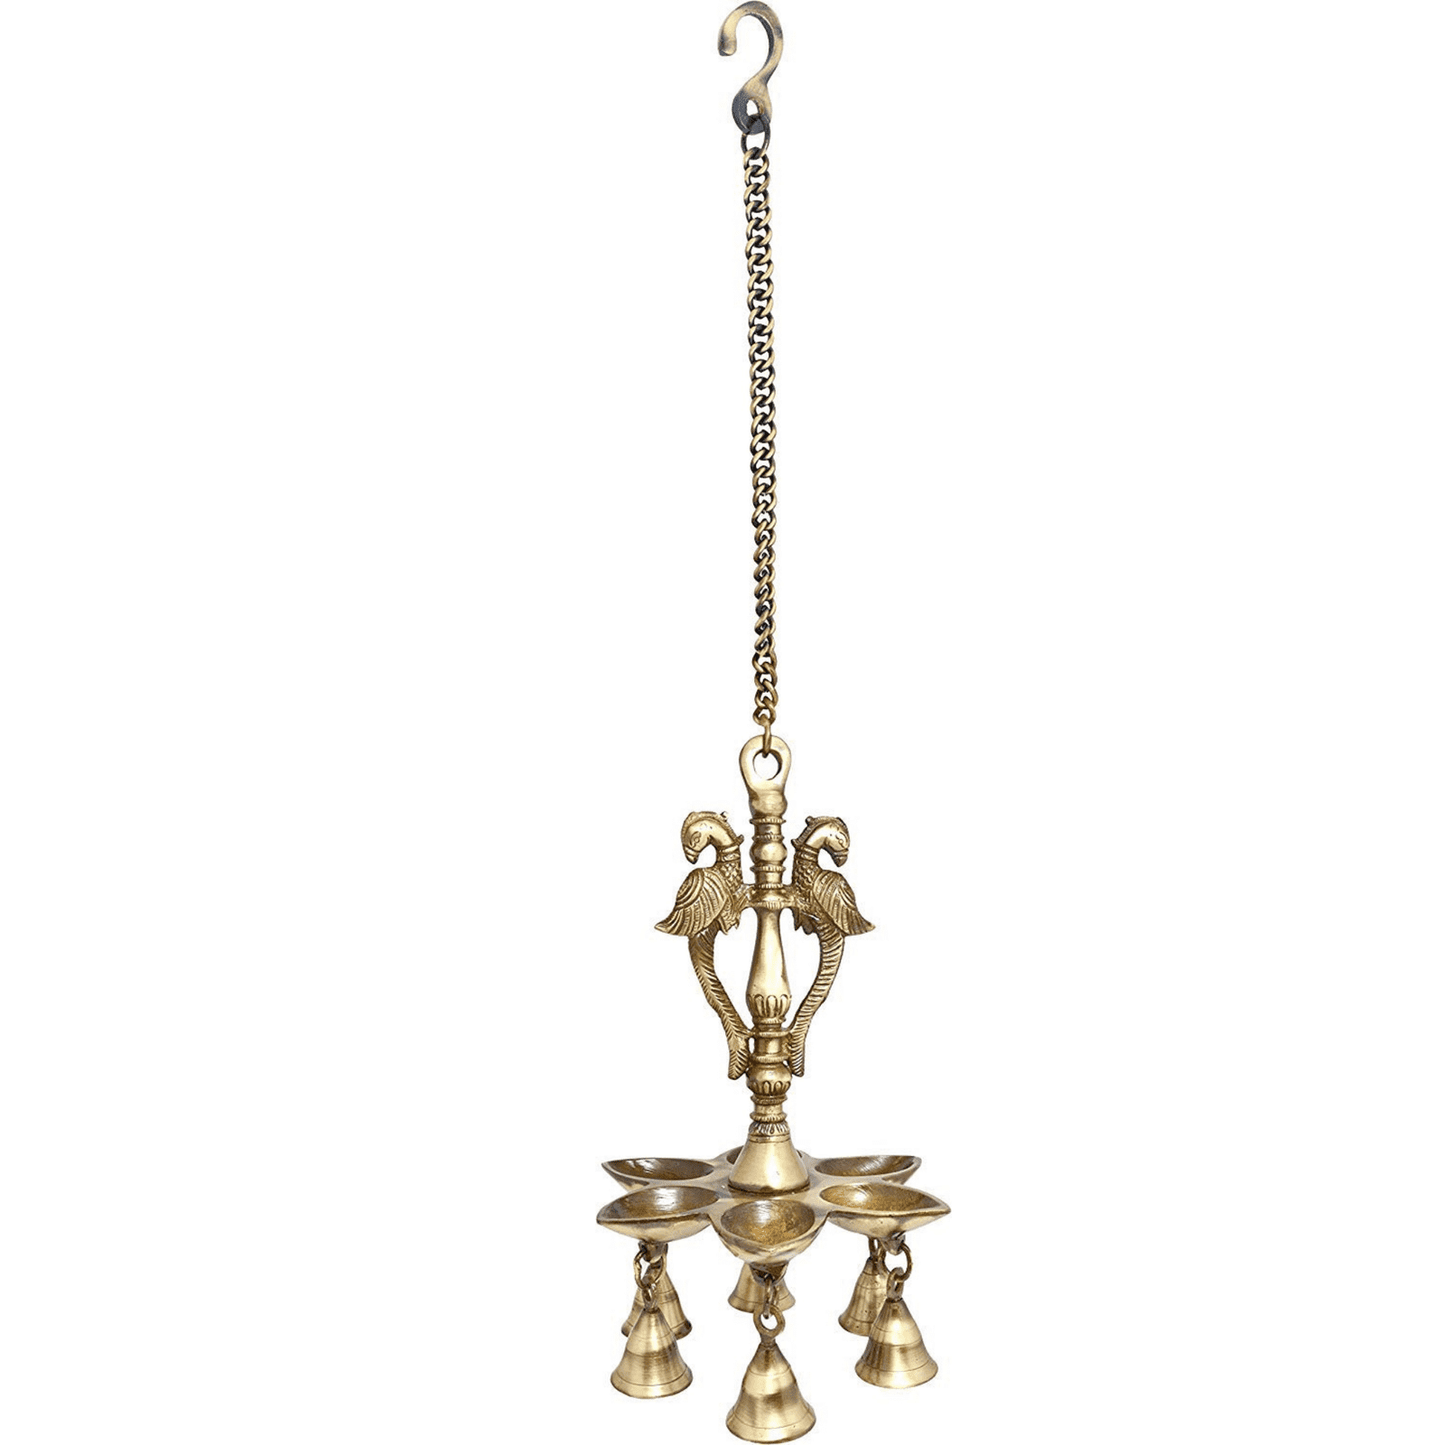 Buy Hanging Diya For Pooja Room, Wall Hanging Brass Lamp in Peacock Design